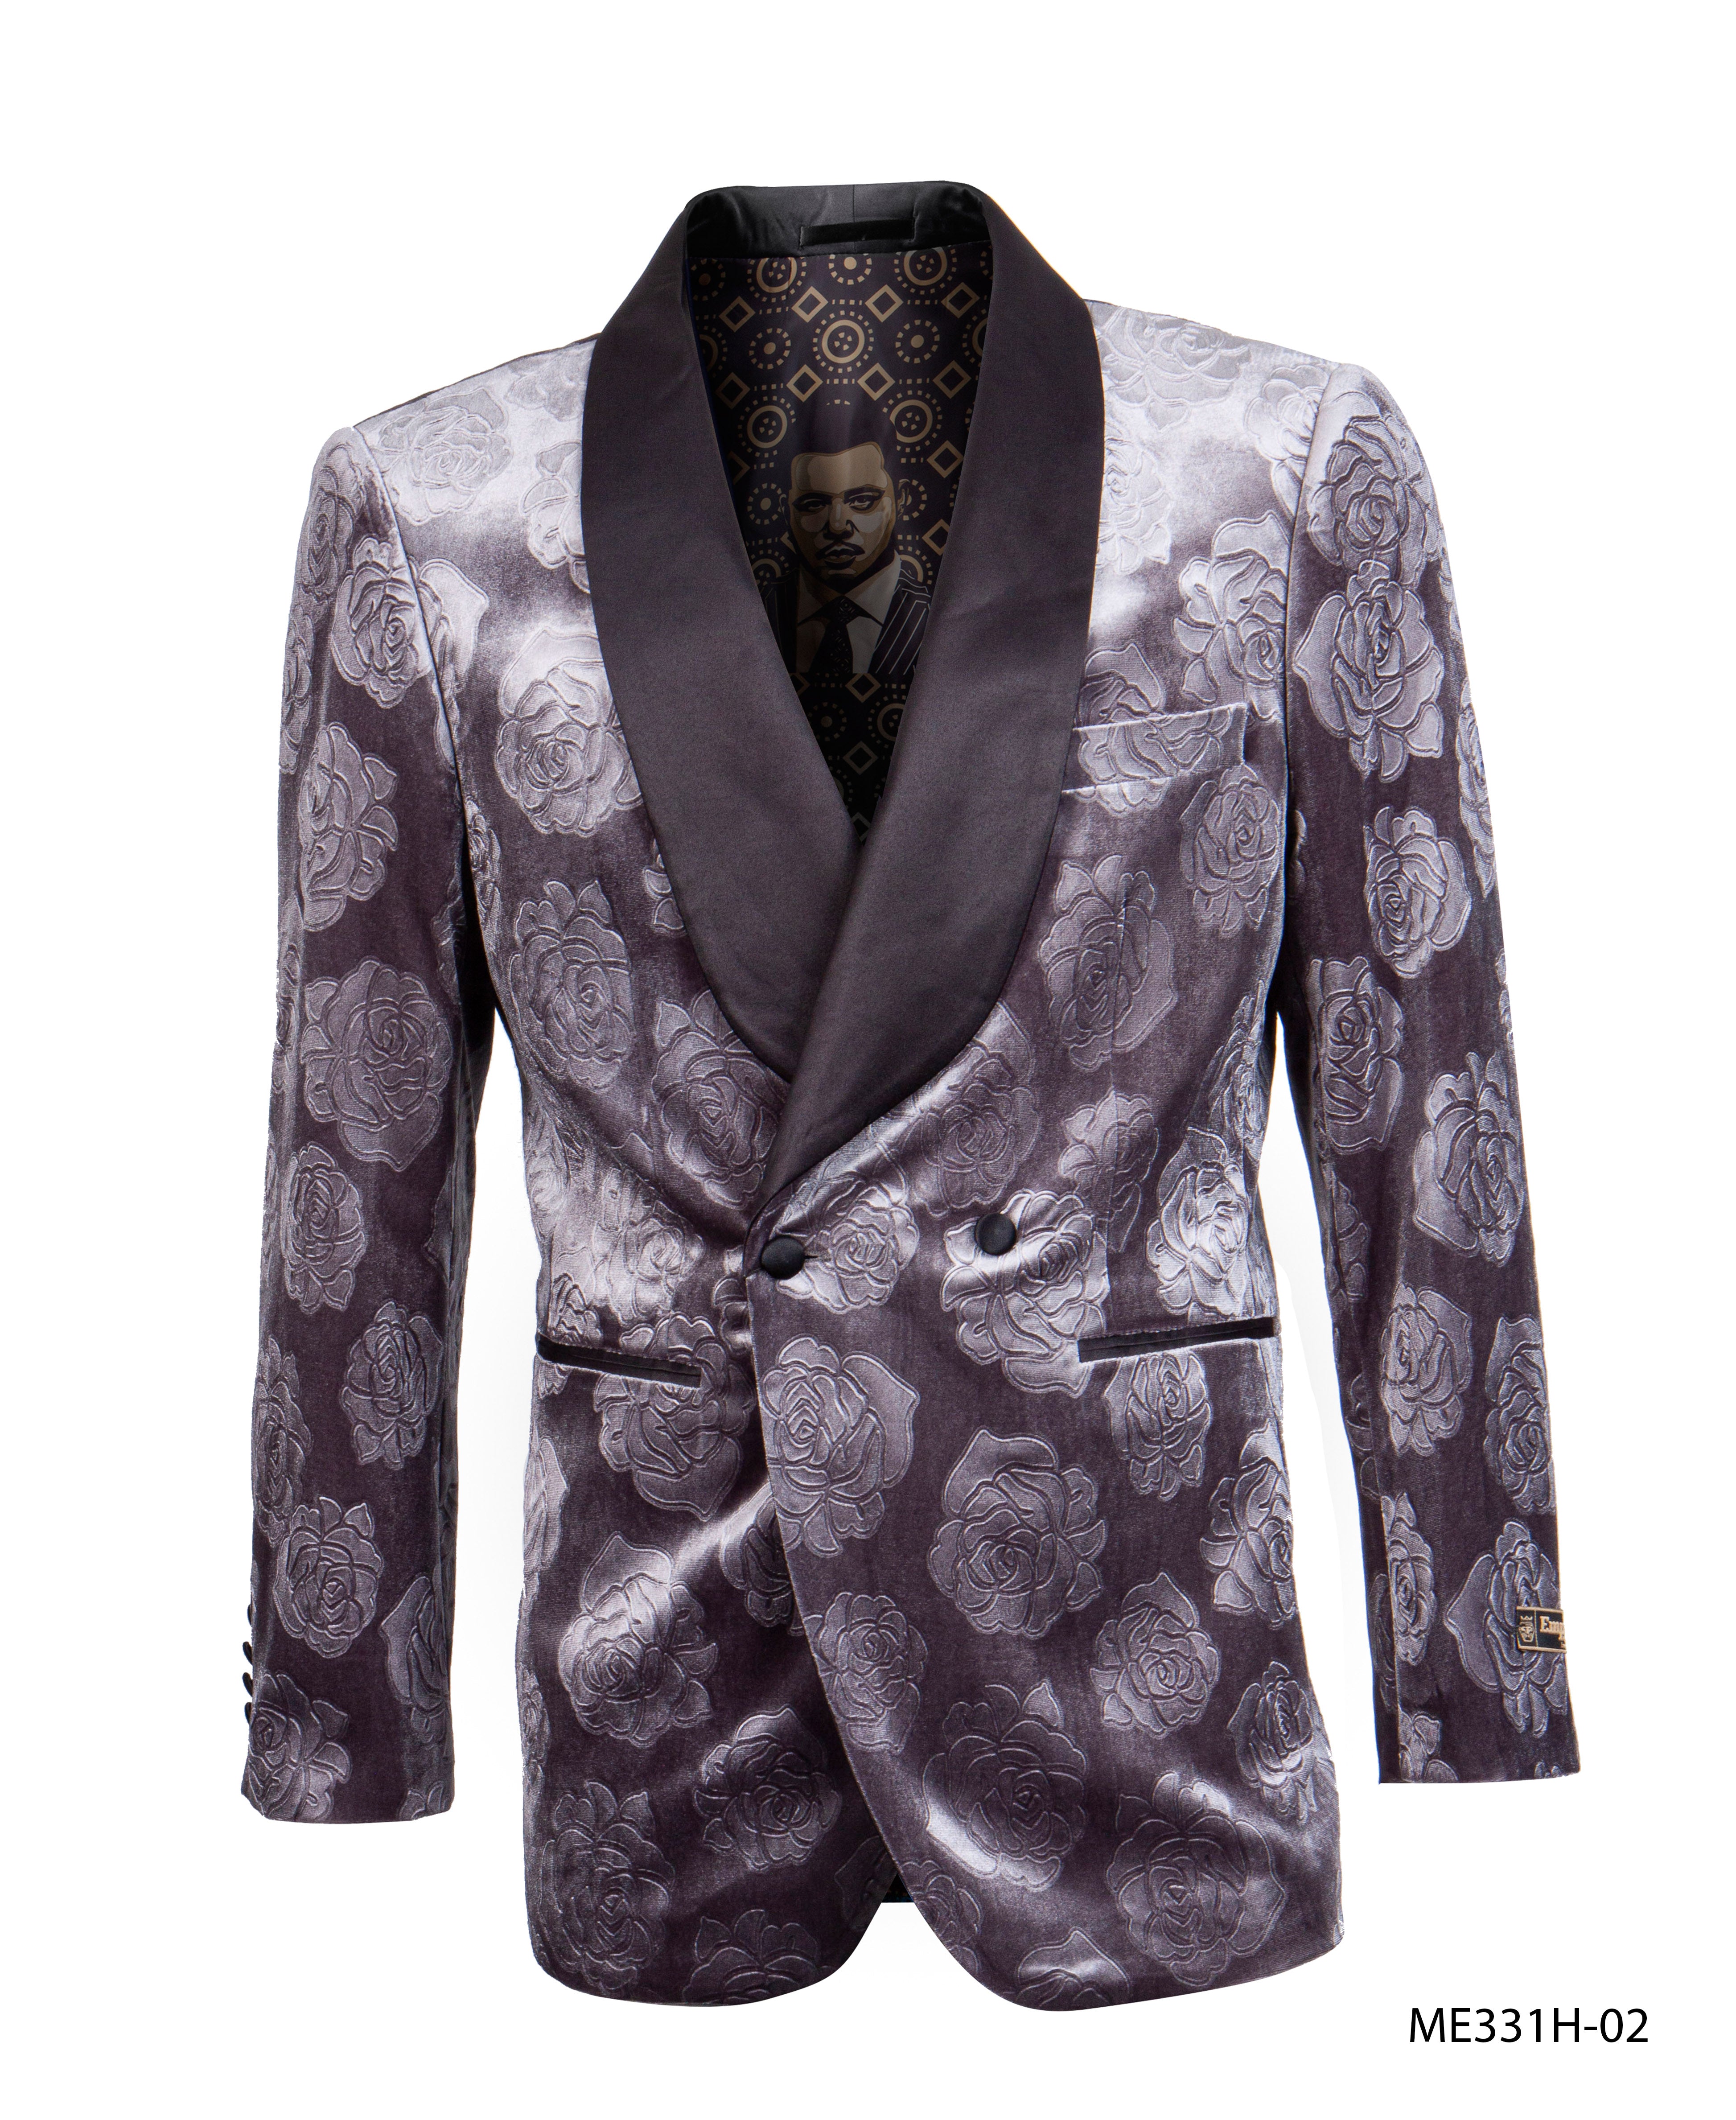 Tan Empire Show Blazers Formal Dinner Suit Jackets For Men ME317H-01